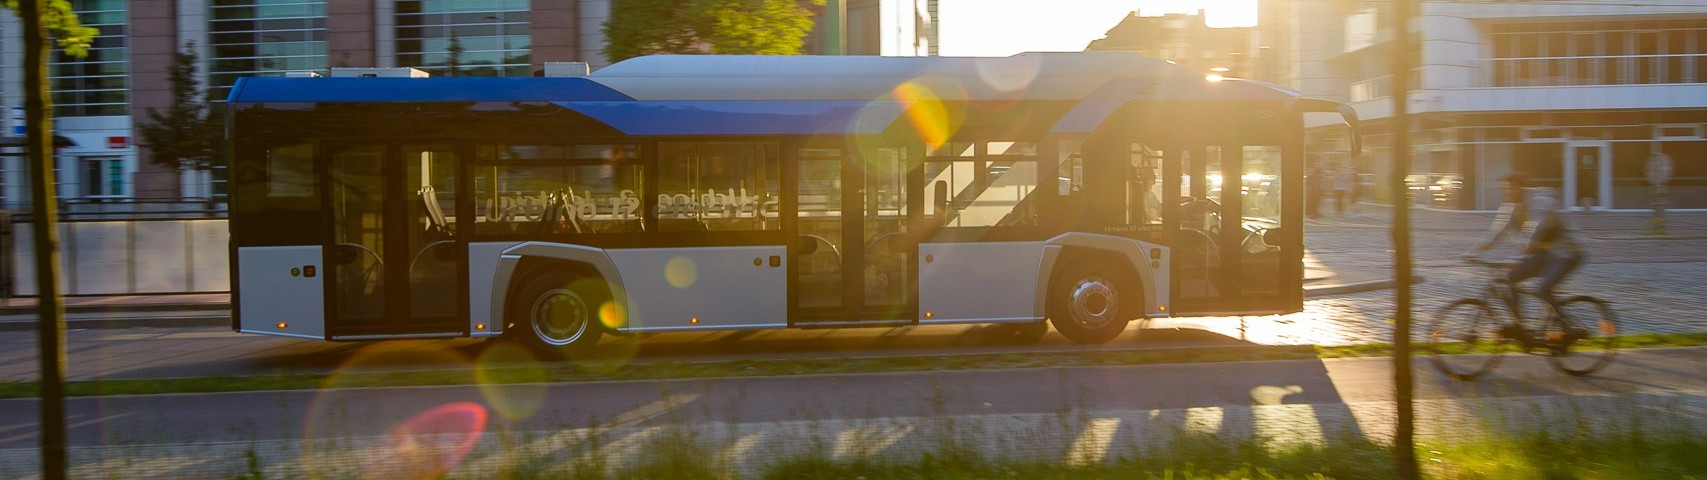 24 electric Solaris Urbino 12 buses strengthen Barcelona’s zero-emission fleet